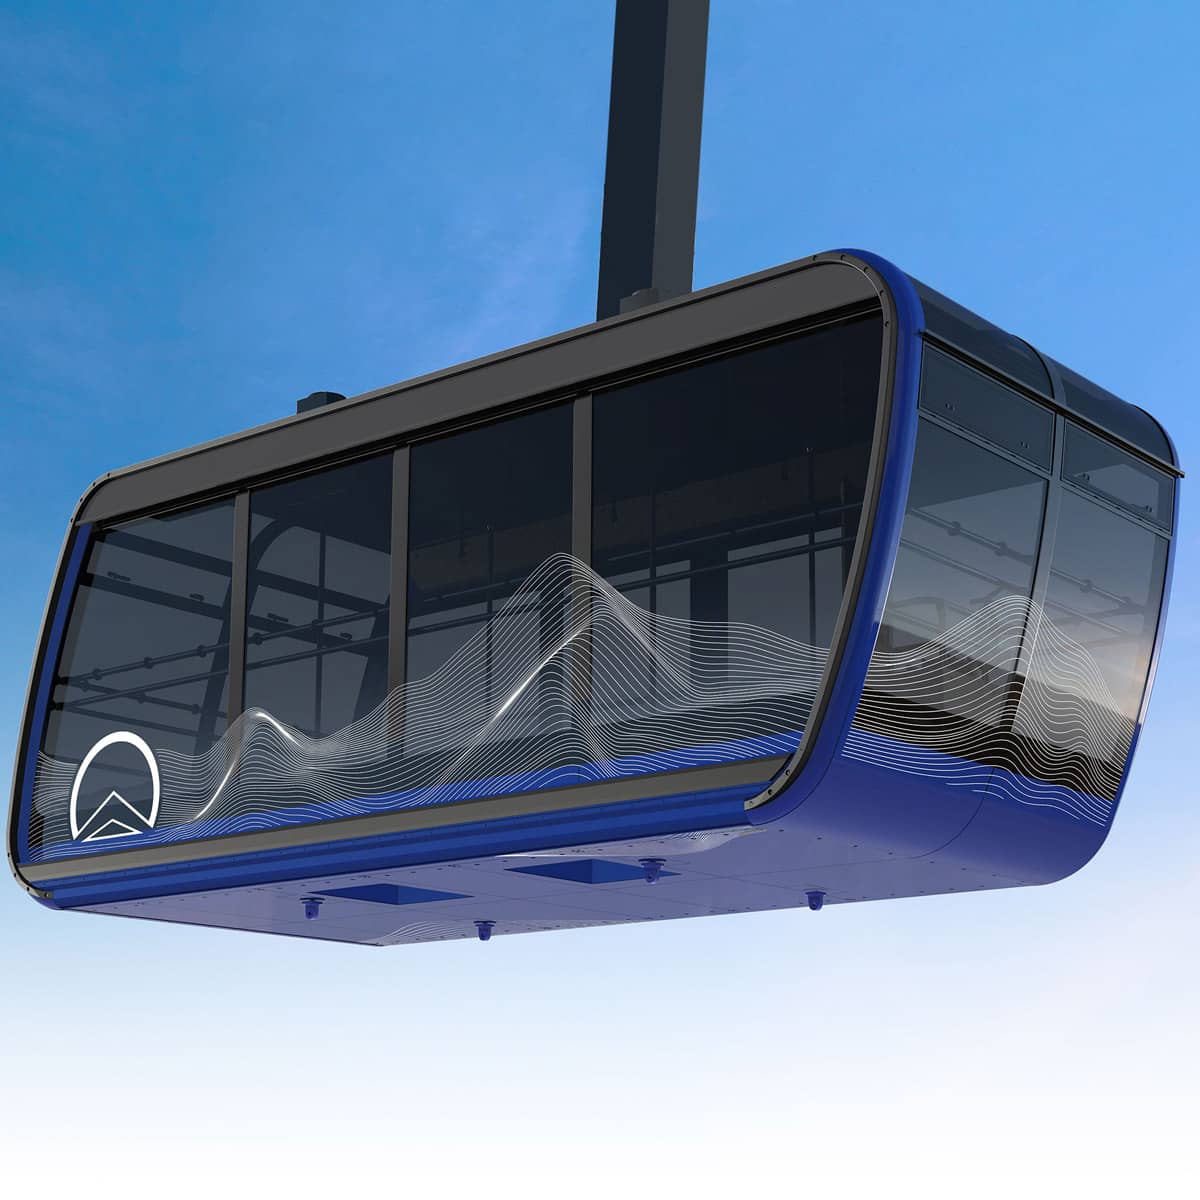 Tram cabin rendering